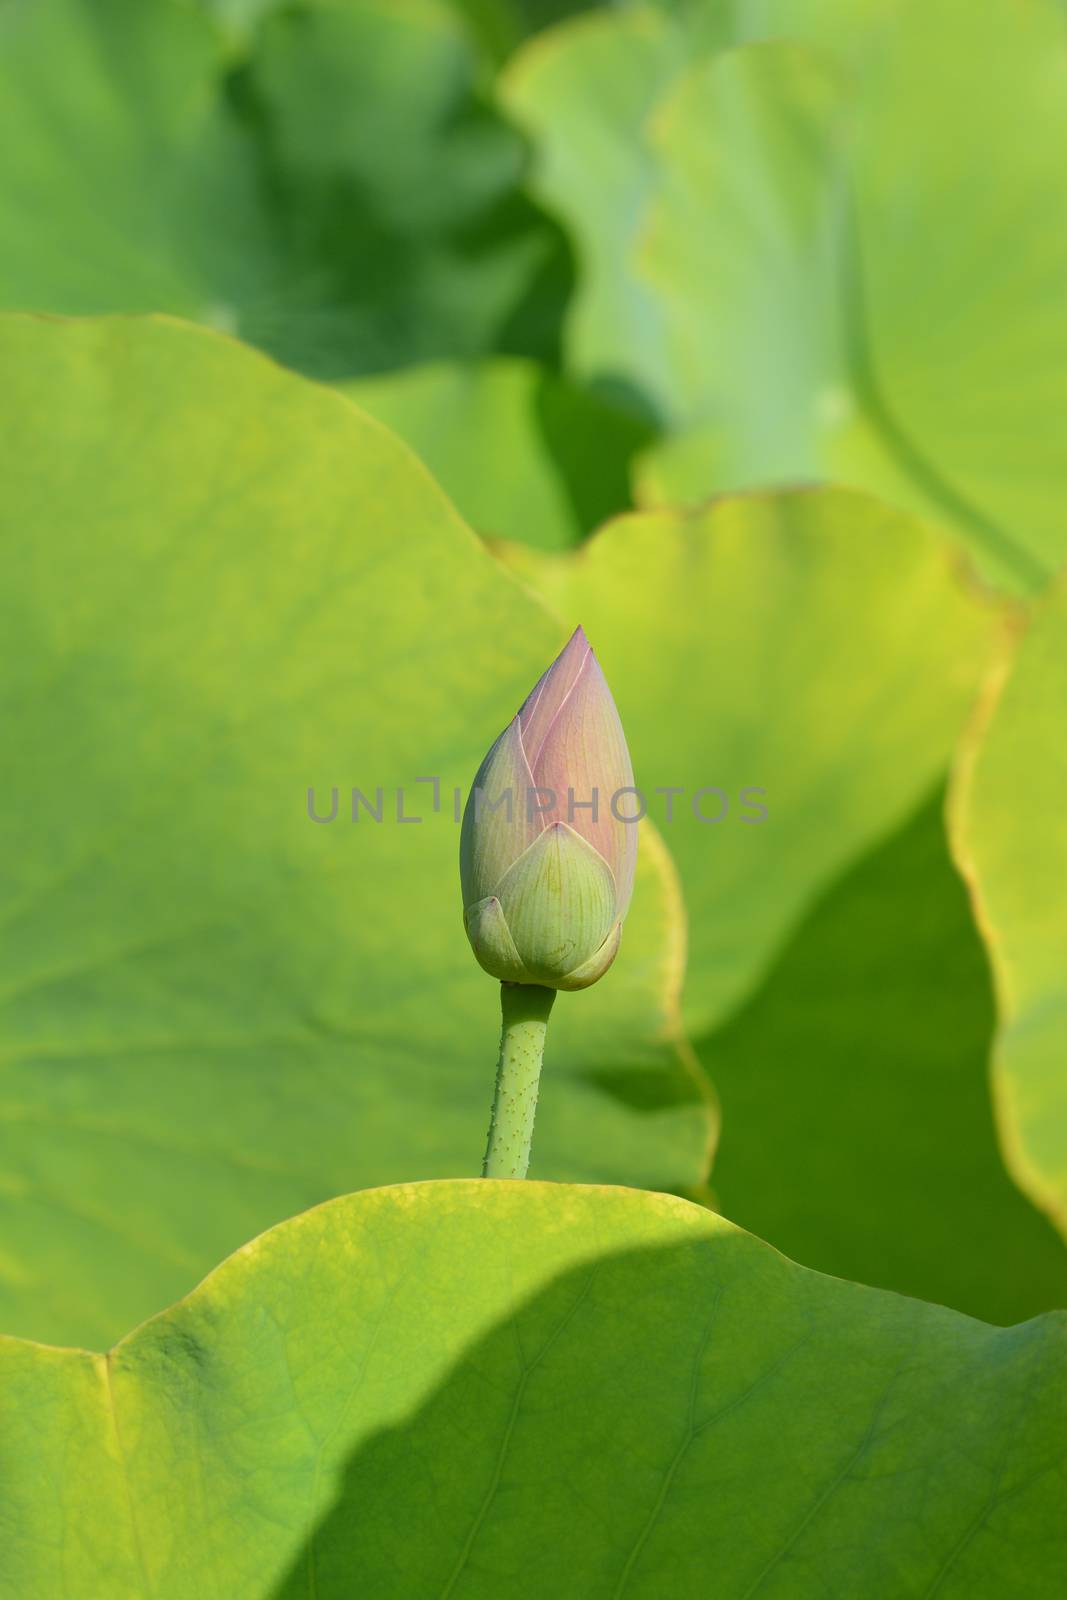 Sacred lotus flower bud - Latin name - Nelumbo nucifera